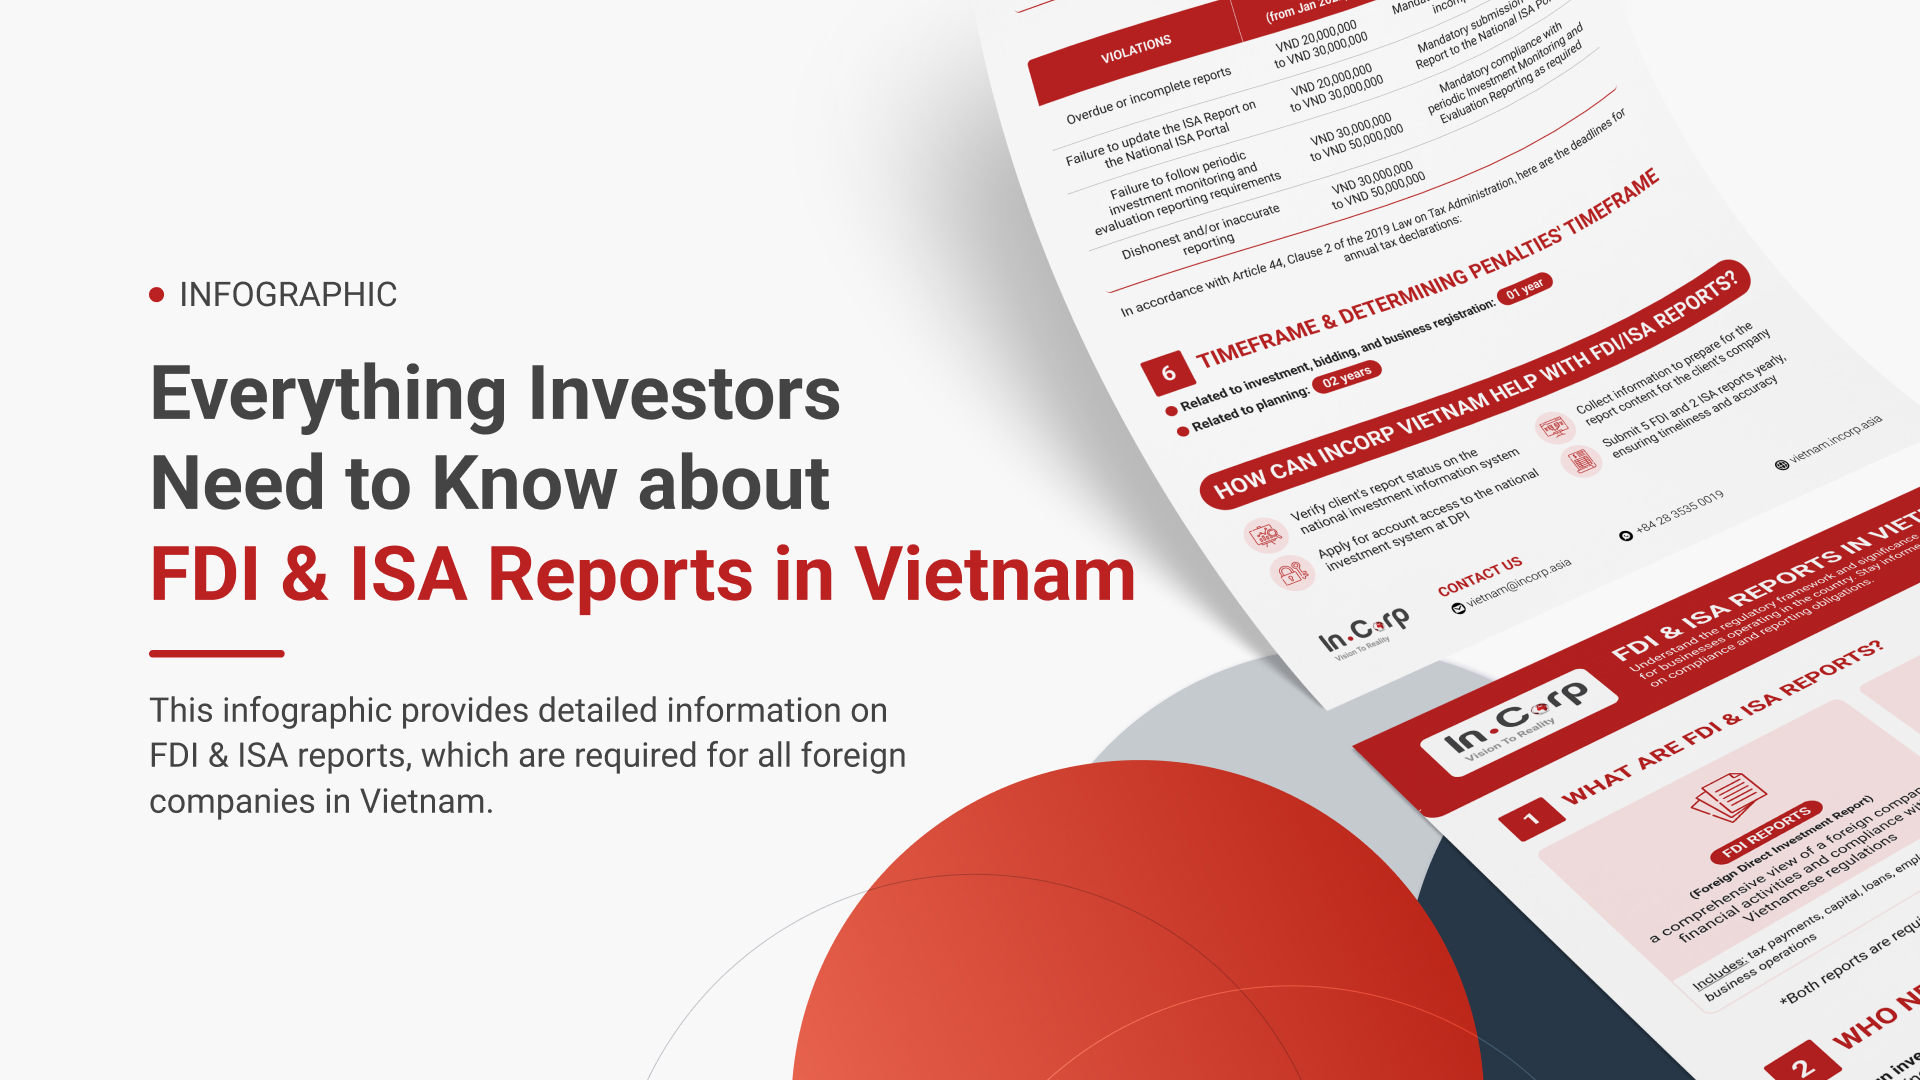 FDI & ISA Reports in Vietnam